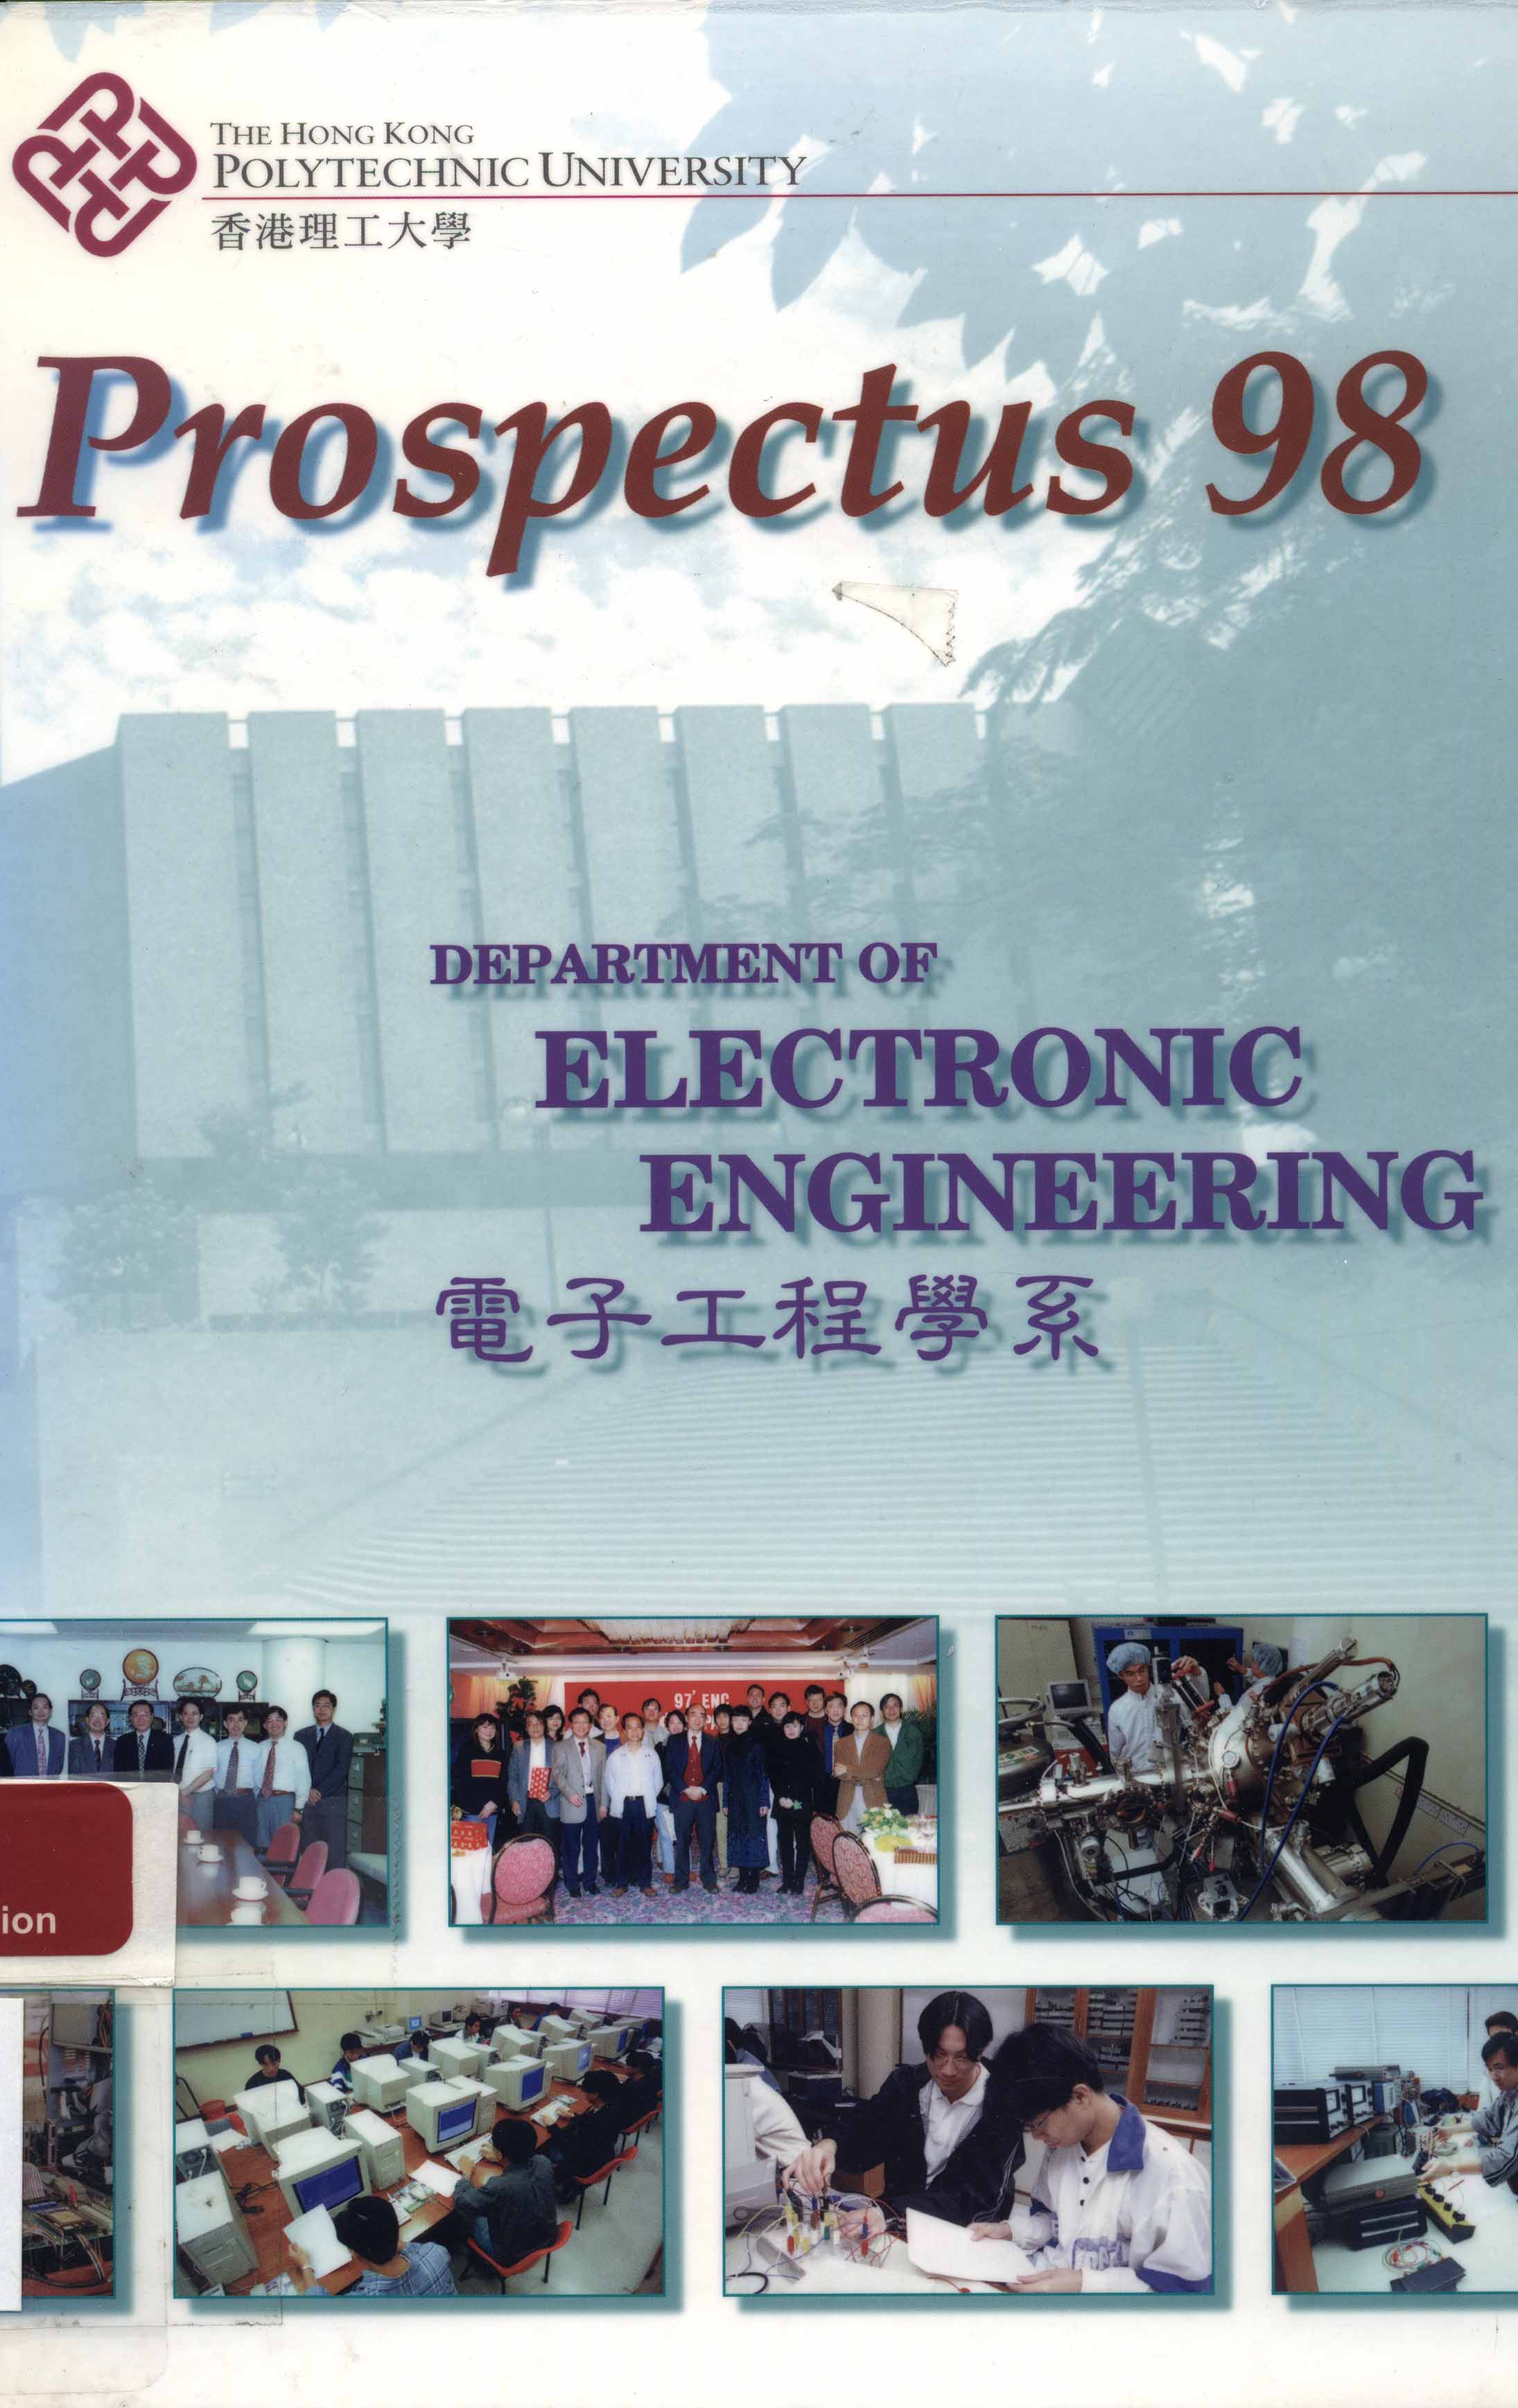 Prospectus 98 (Department of Electronic Engineering)